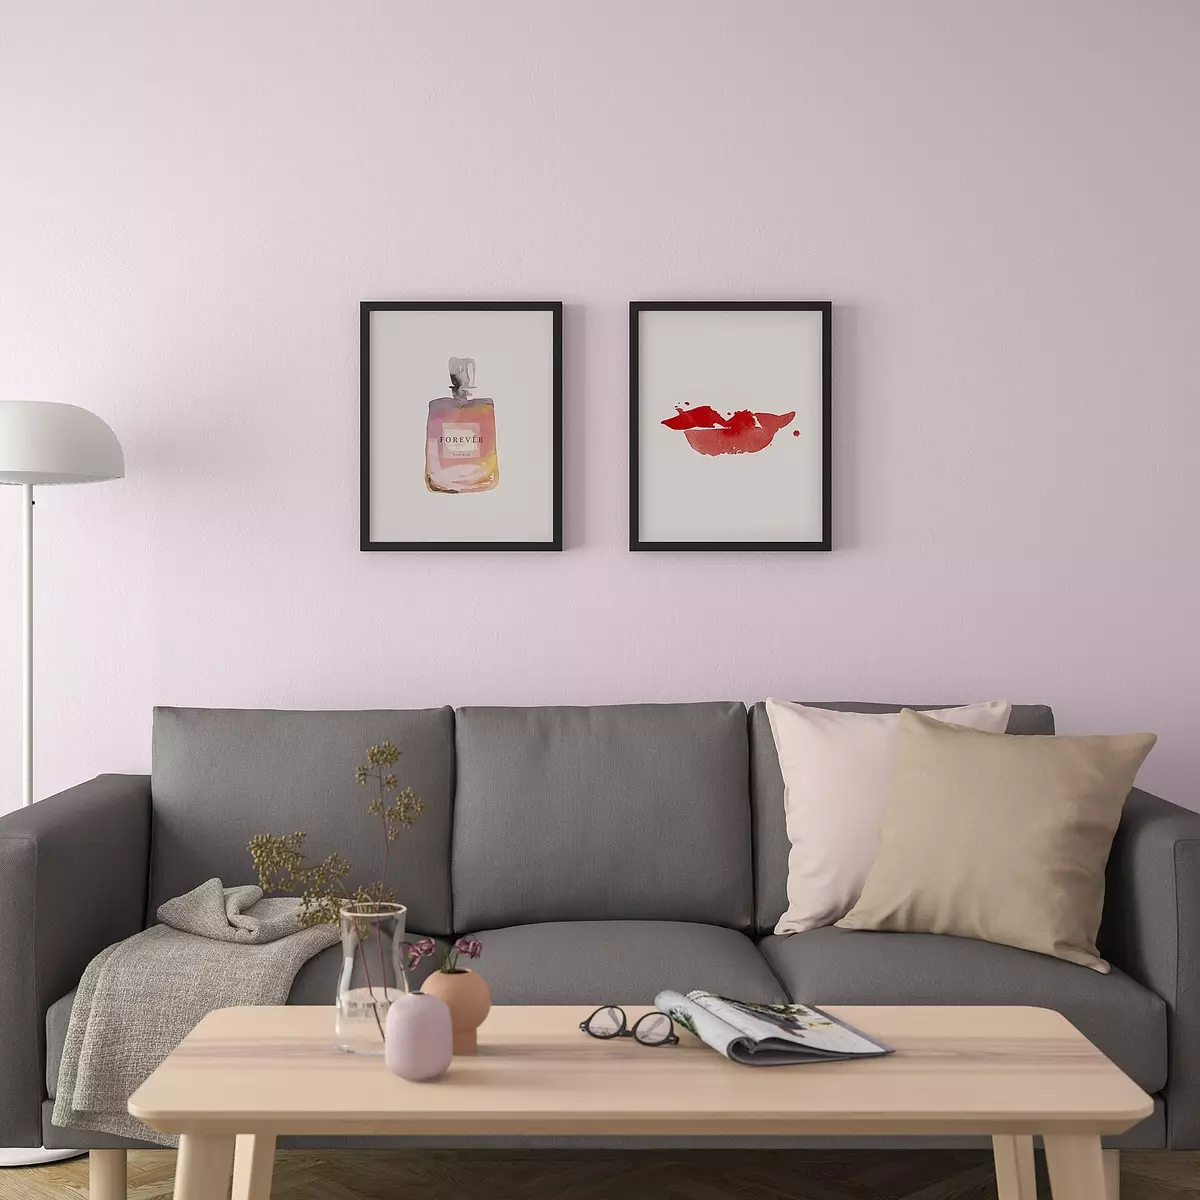 IKEA Αφίσες: Ανασκόπηση Αφίσες για τοίχους και την επιλογή τους για τα εσωτερικά, πλαίσια και κατόχους για αφίσες, αφίσες 50 για 70 και άλλα μεγέθη για την κουζίνα και το σαλόνι, ασπρόμαυρες και χρωματικές αφίσες 20793_25